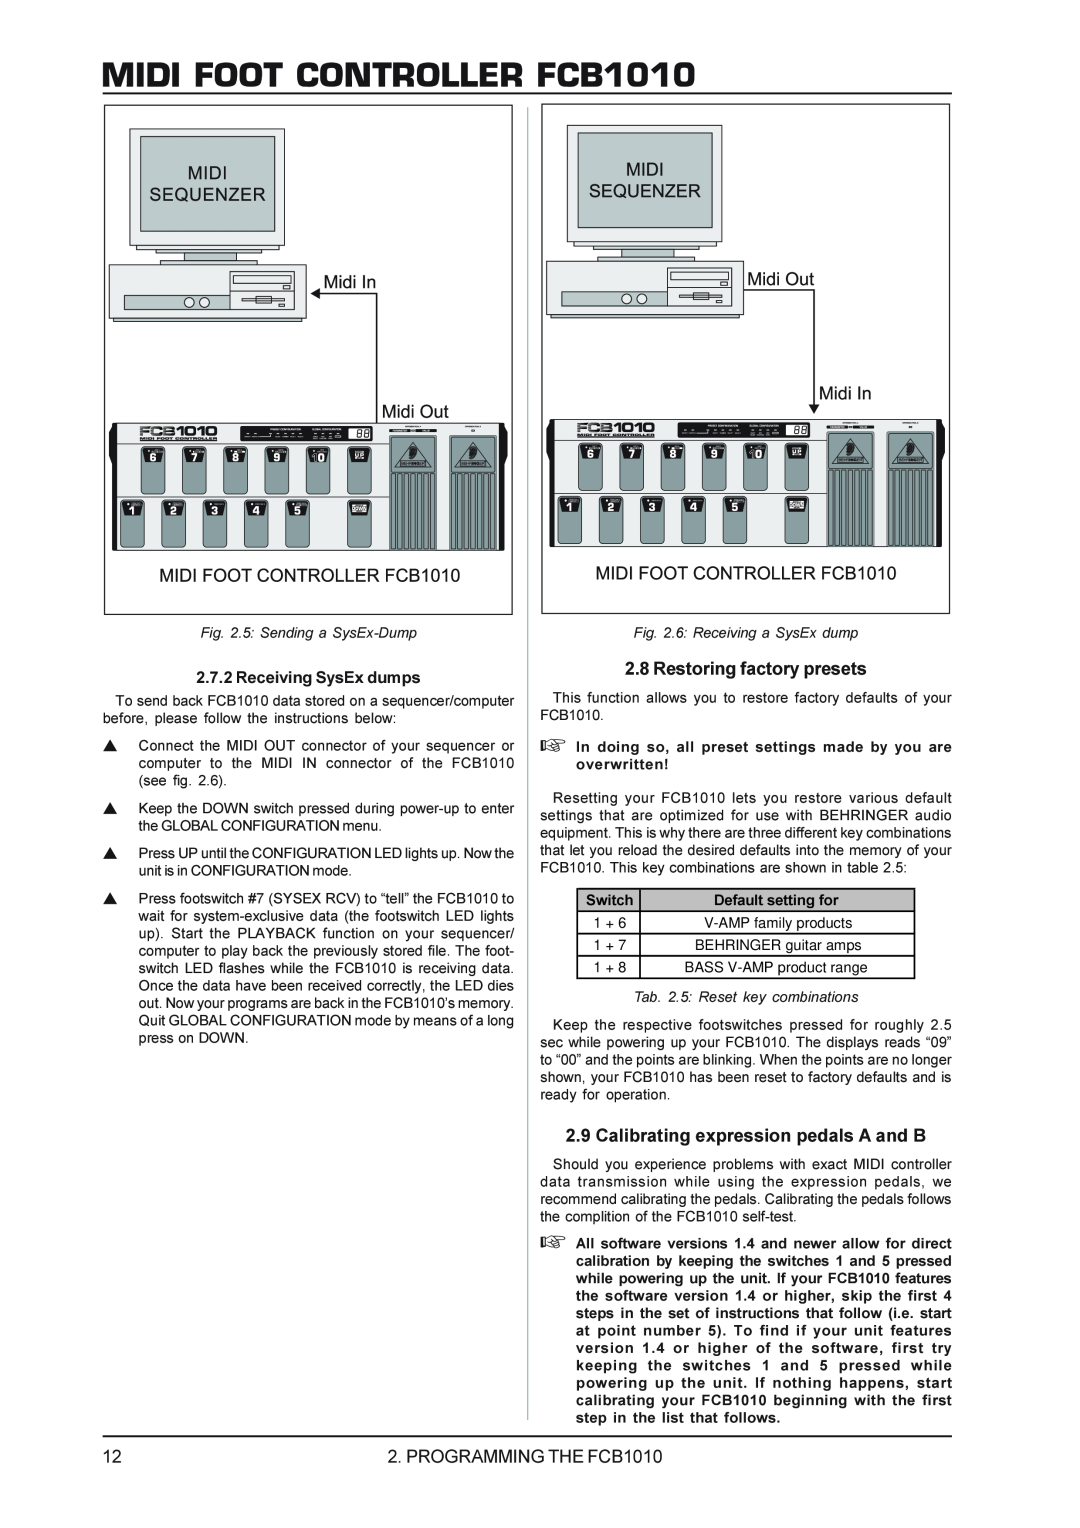 Behringer manual MIDI FOOT CONTROLLER FCB1010, Restoring factory presets, Calibrating expression pedals A and B 